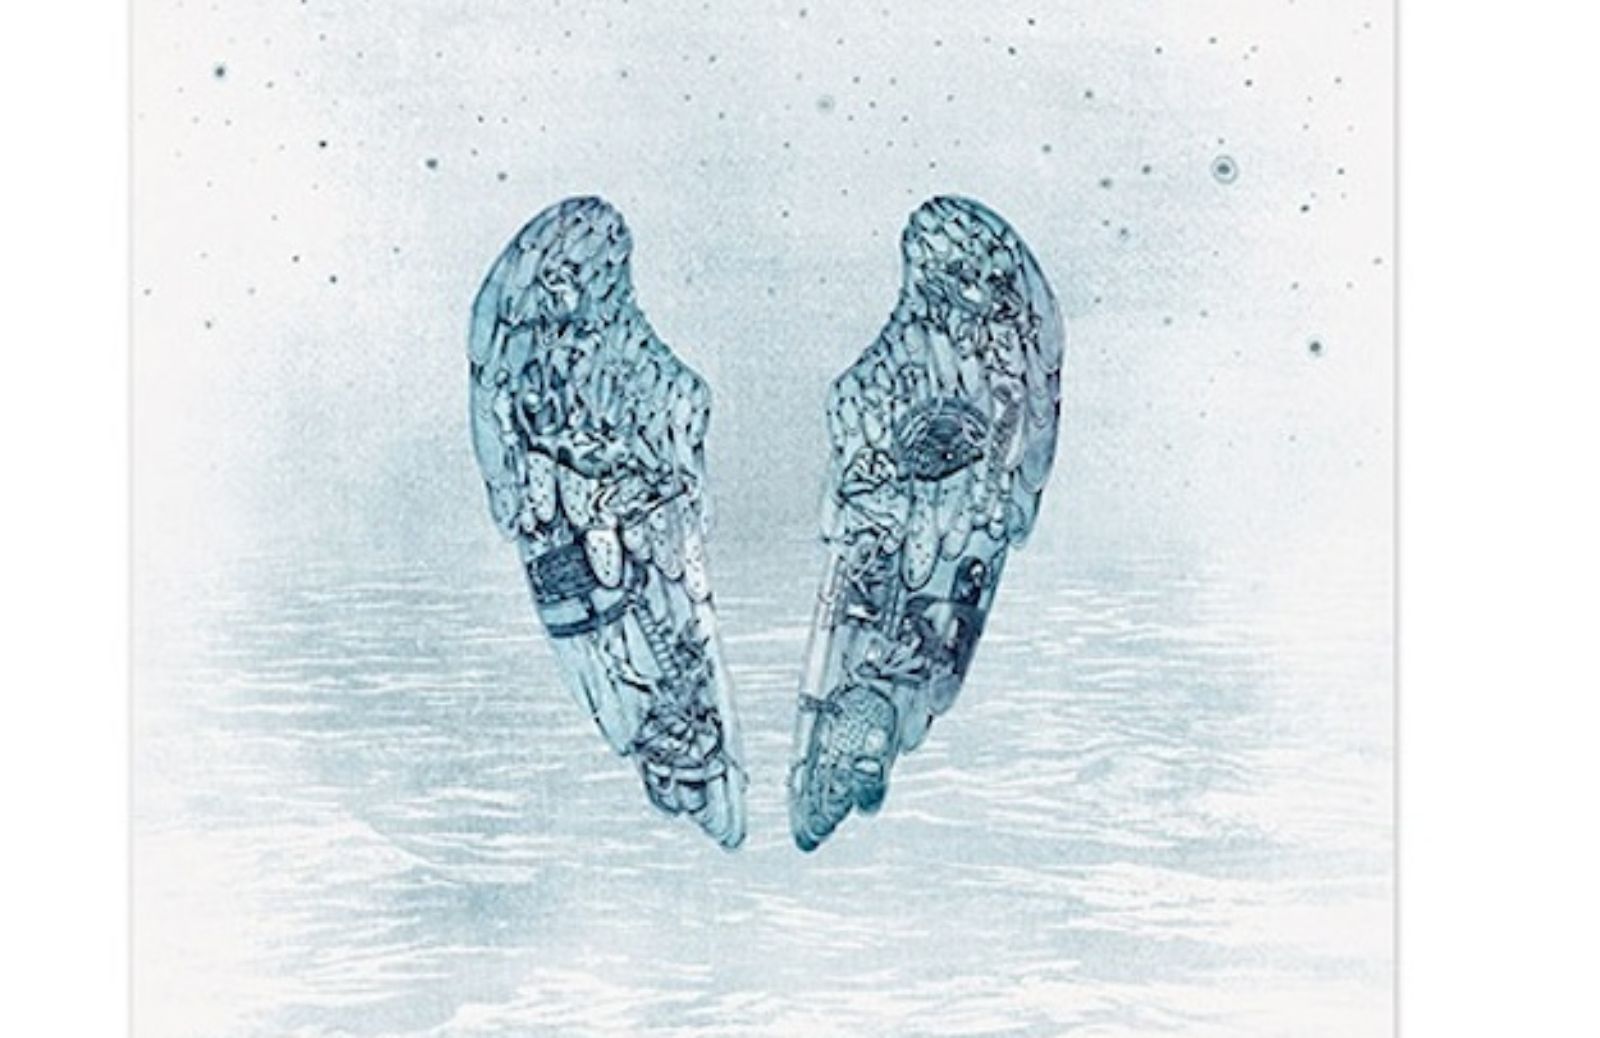 Coldplay nuovo album: a novembre arriva Ghost Stories Live 2014